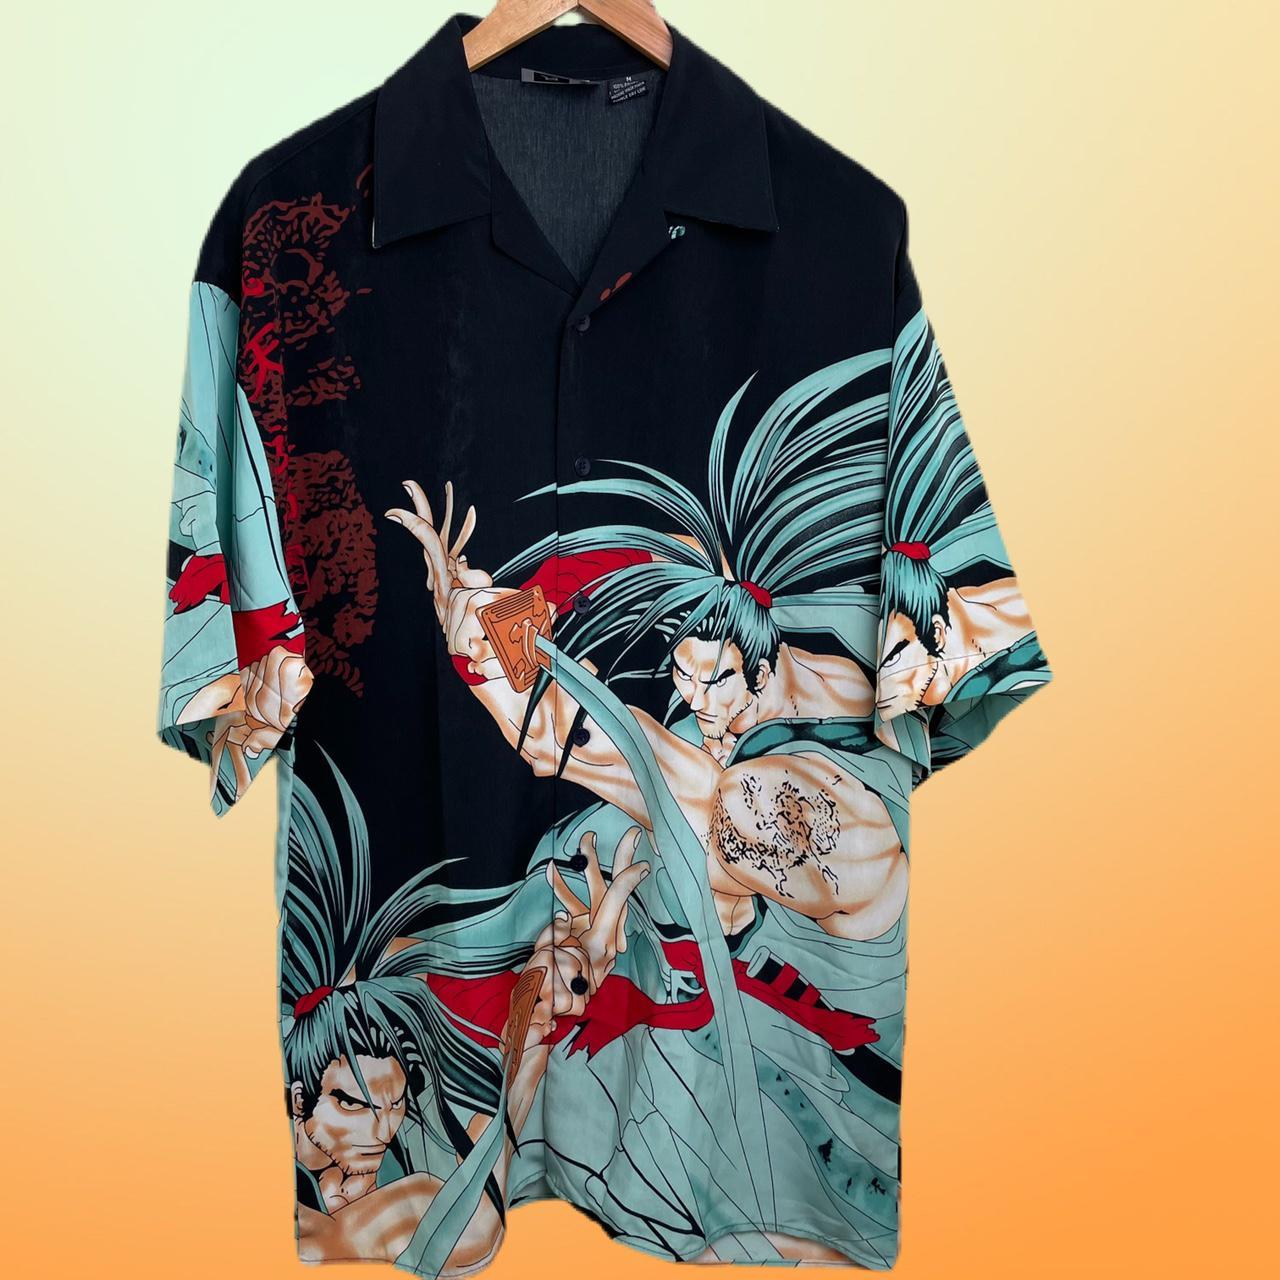 Anime Long Sleeve Blue Button Up Shirt All Over Print Japanese Warrior -  Size XL | eBay | Blue button up shirt, Casual button down shirts, Anime  shirt